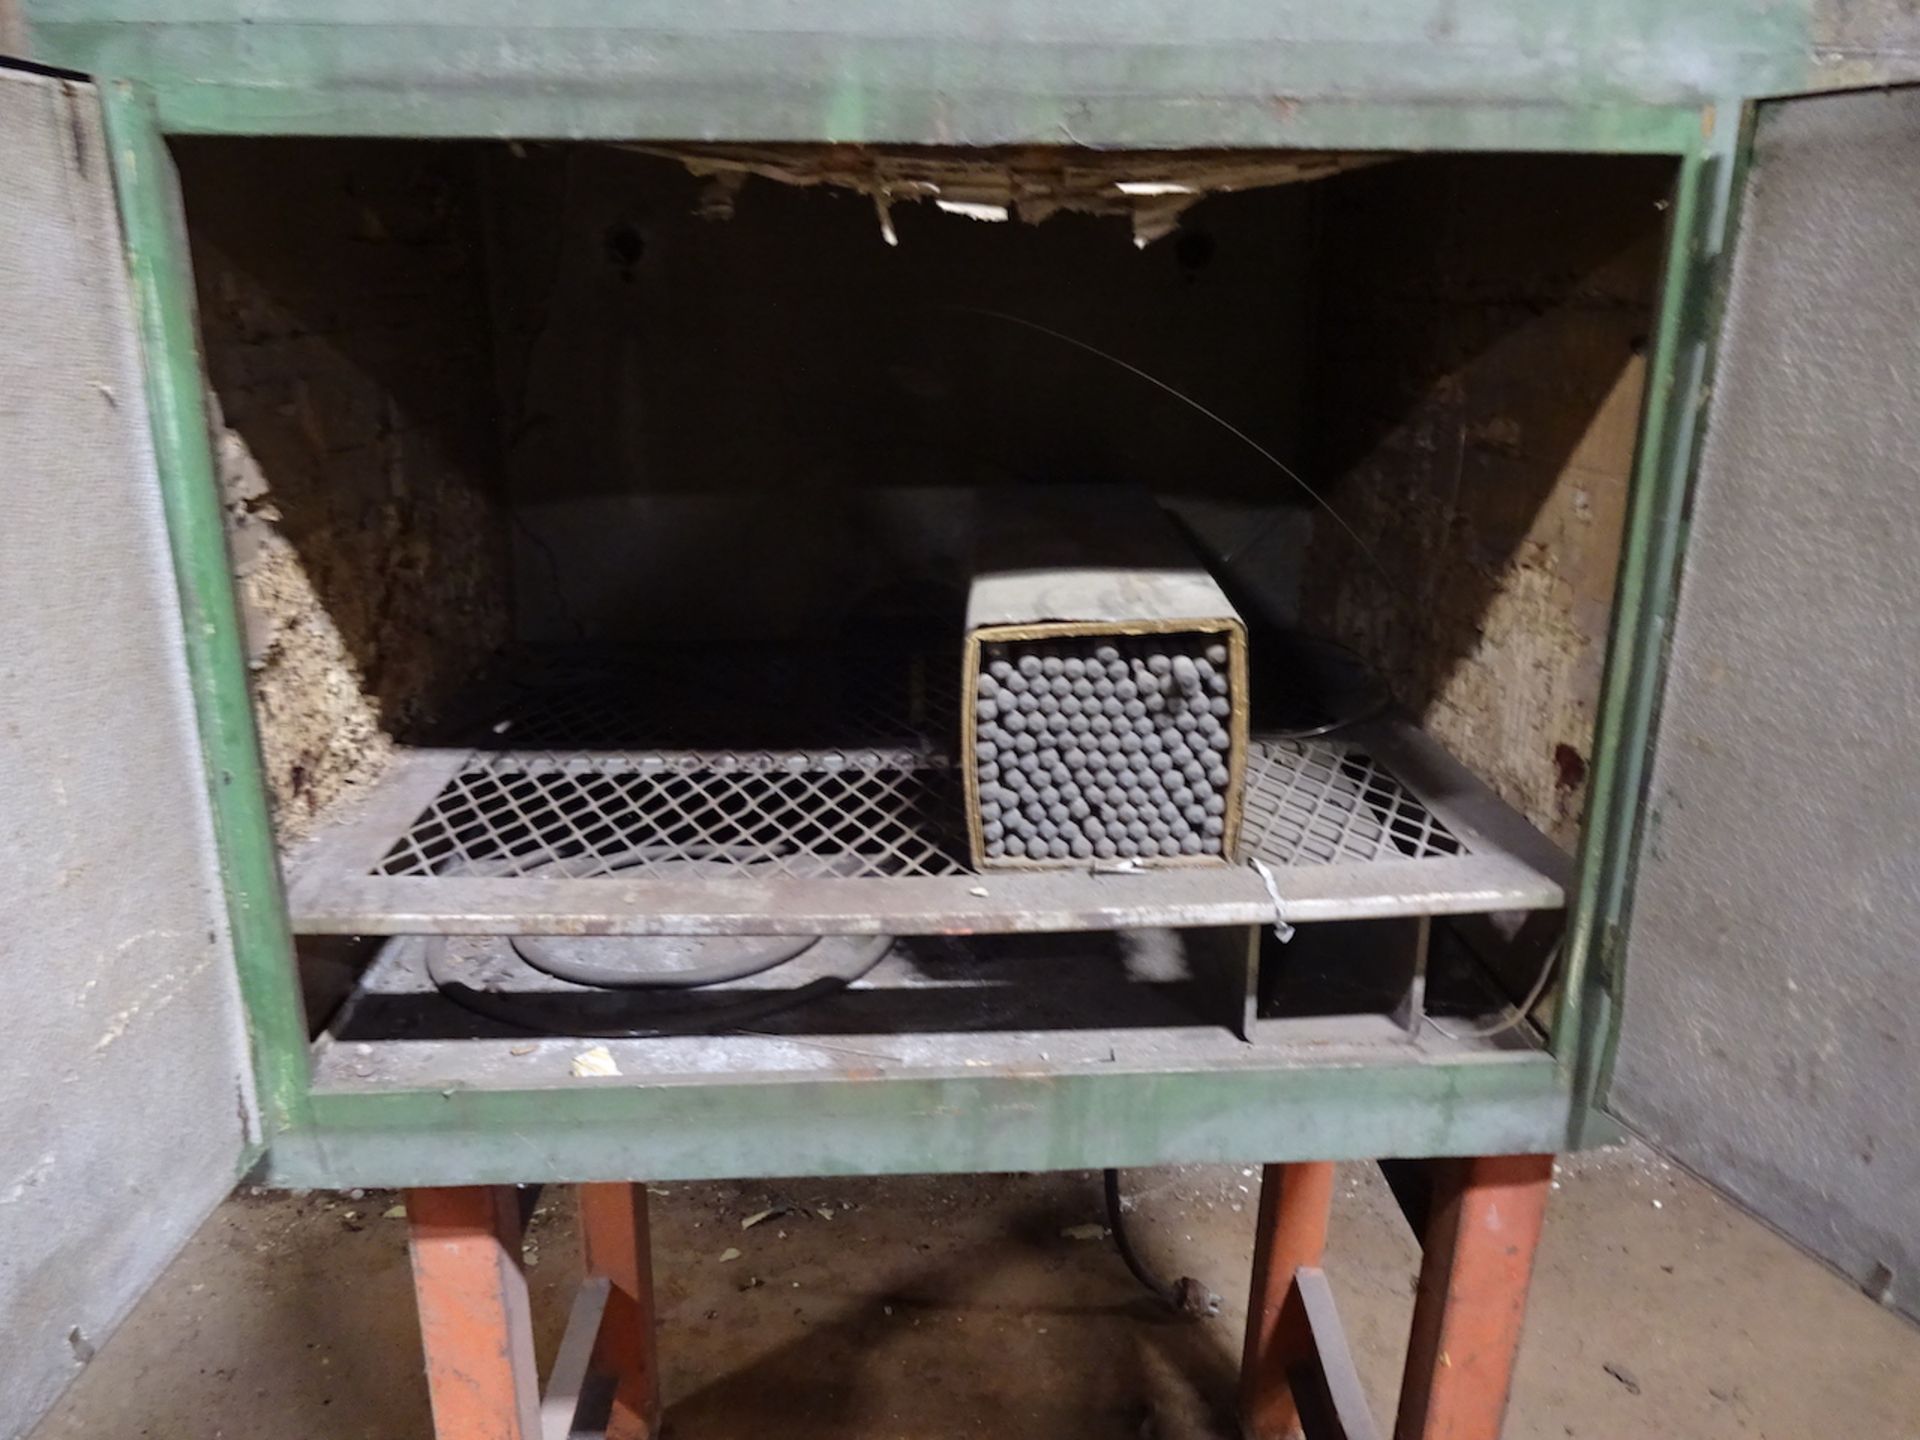 Welding Rod Oven (South Beloit) - Image 2 of 2